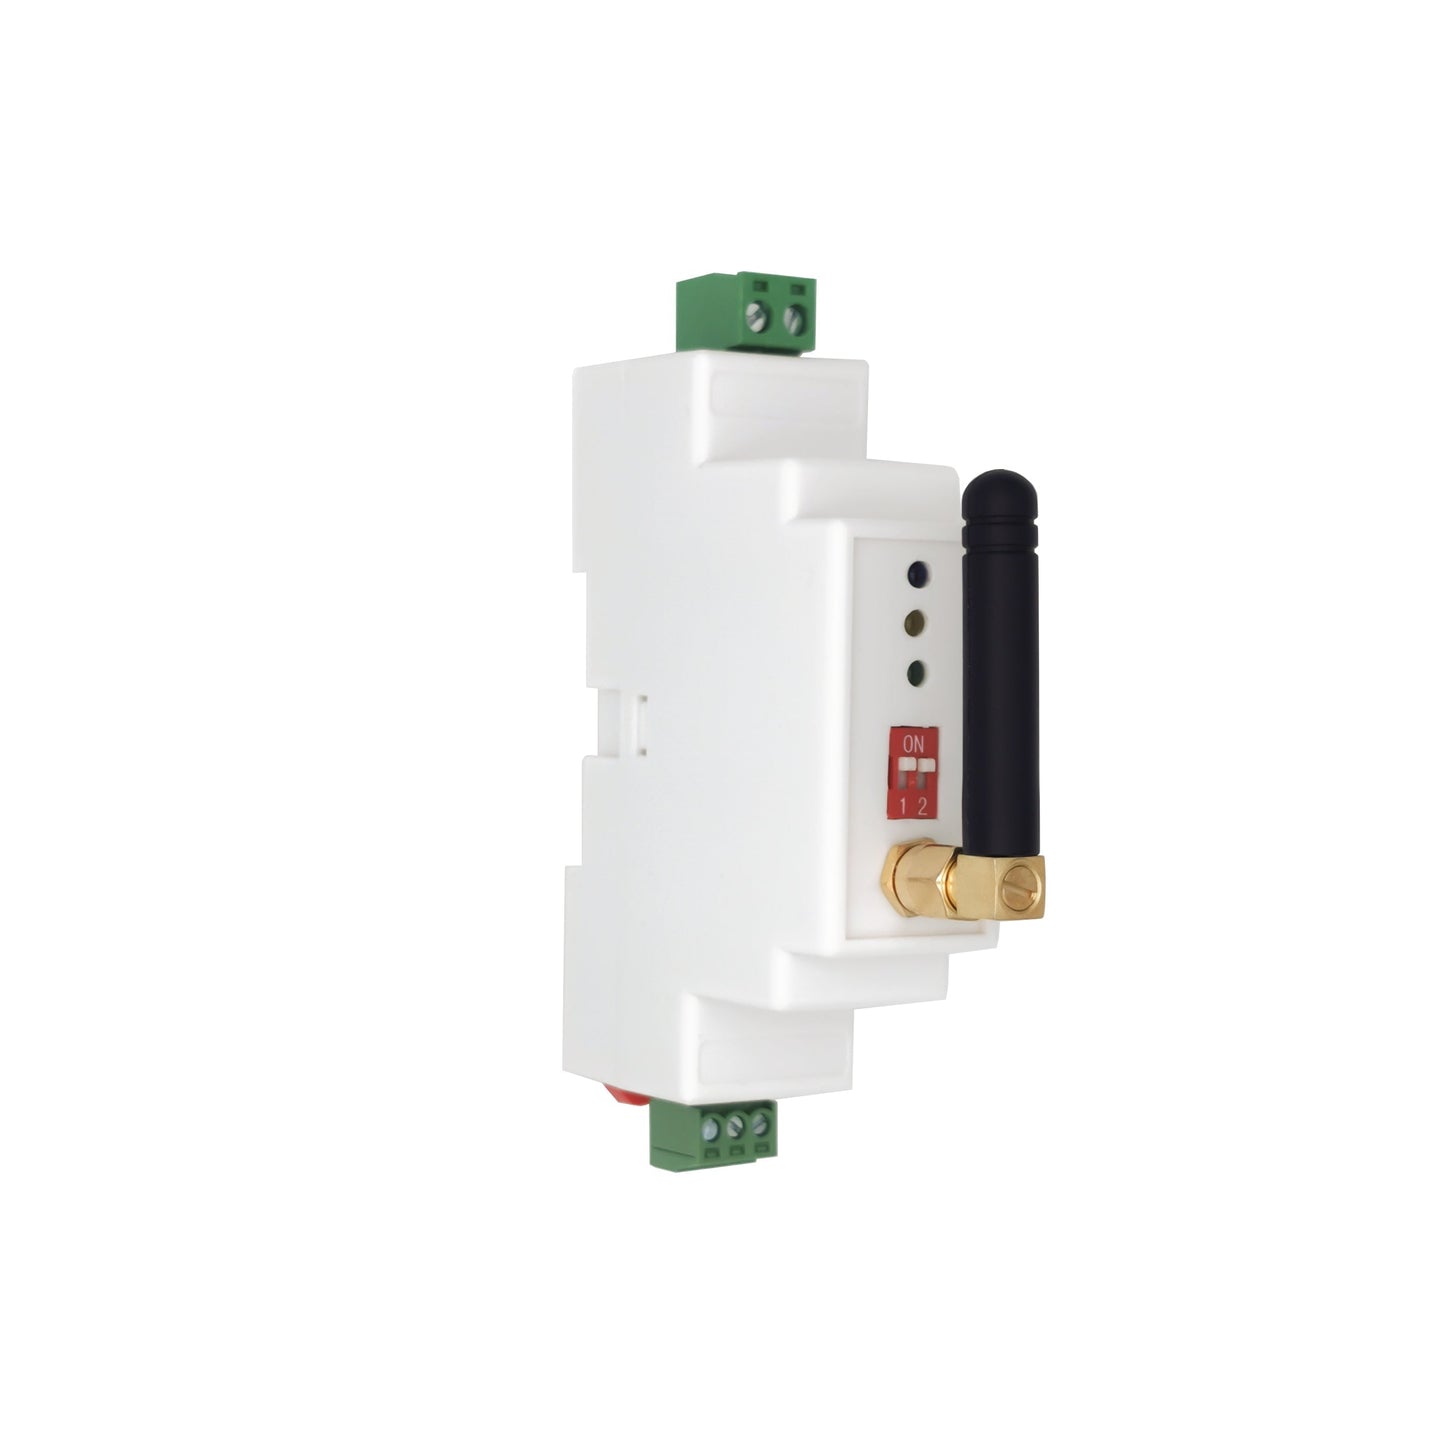 DTU110-P Cost-effective LoRa Wireless DTU Modbus RS485 to RF IoT transceiver modem